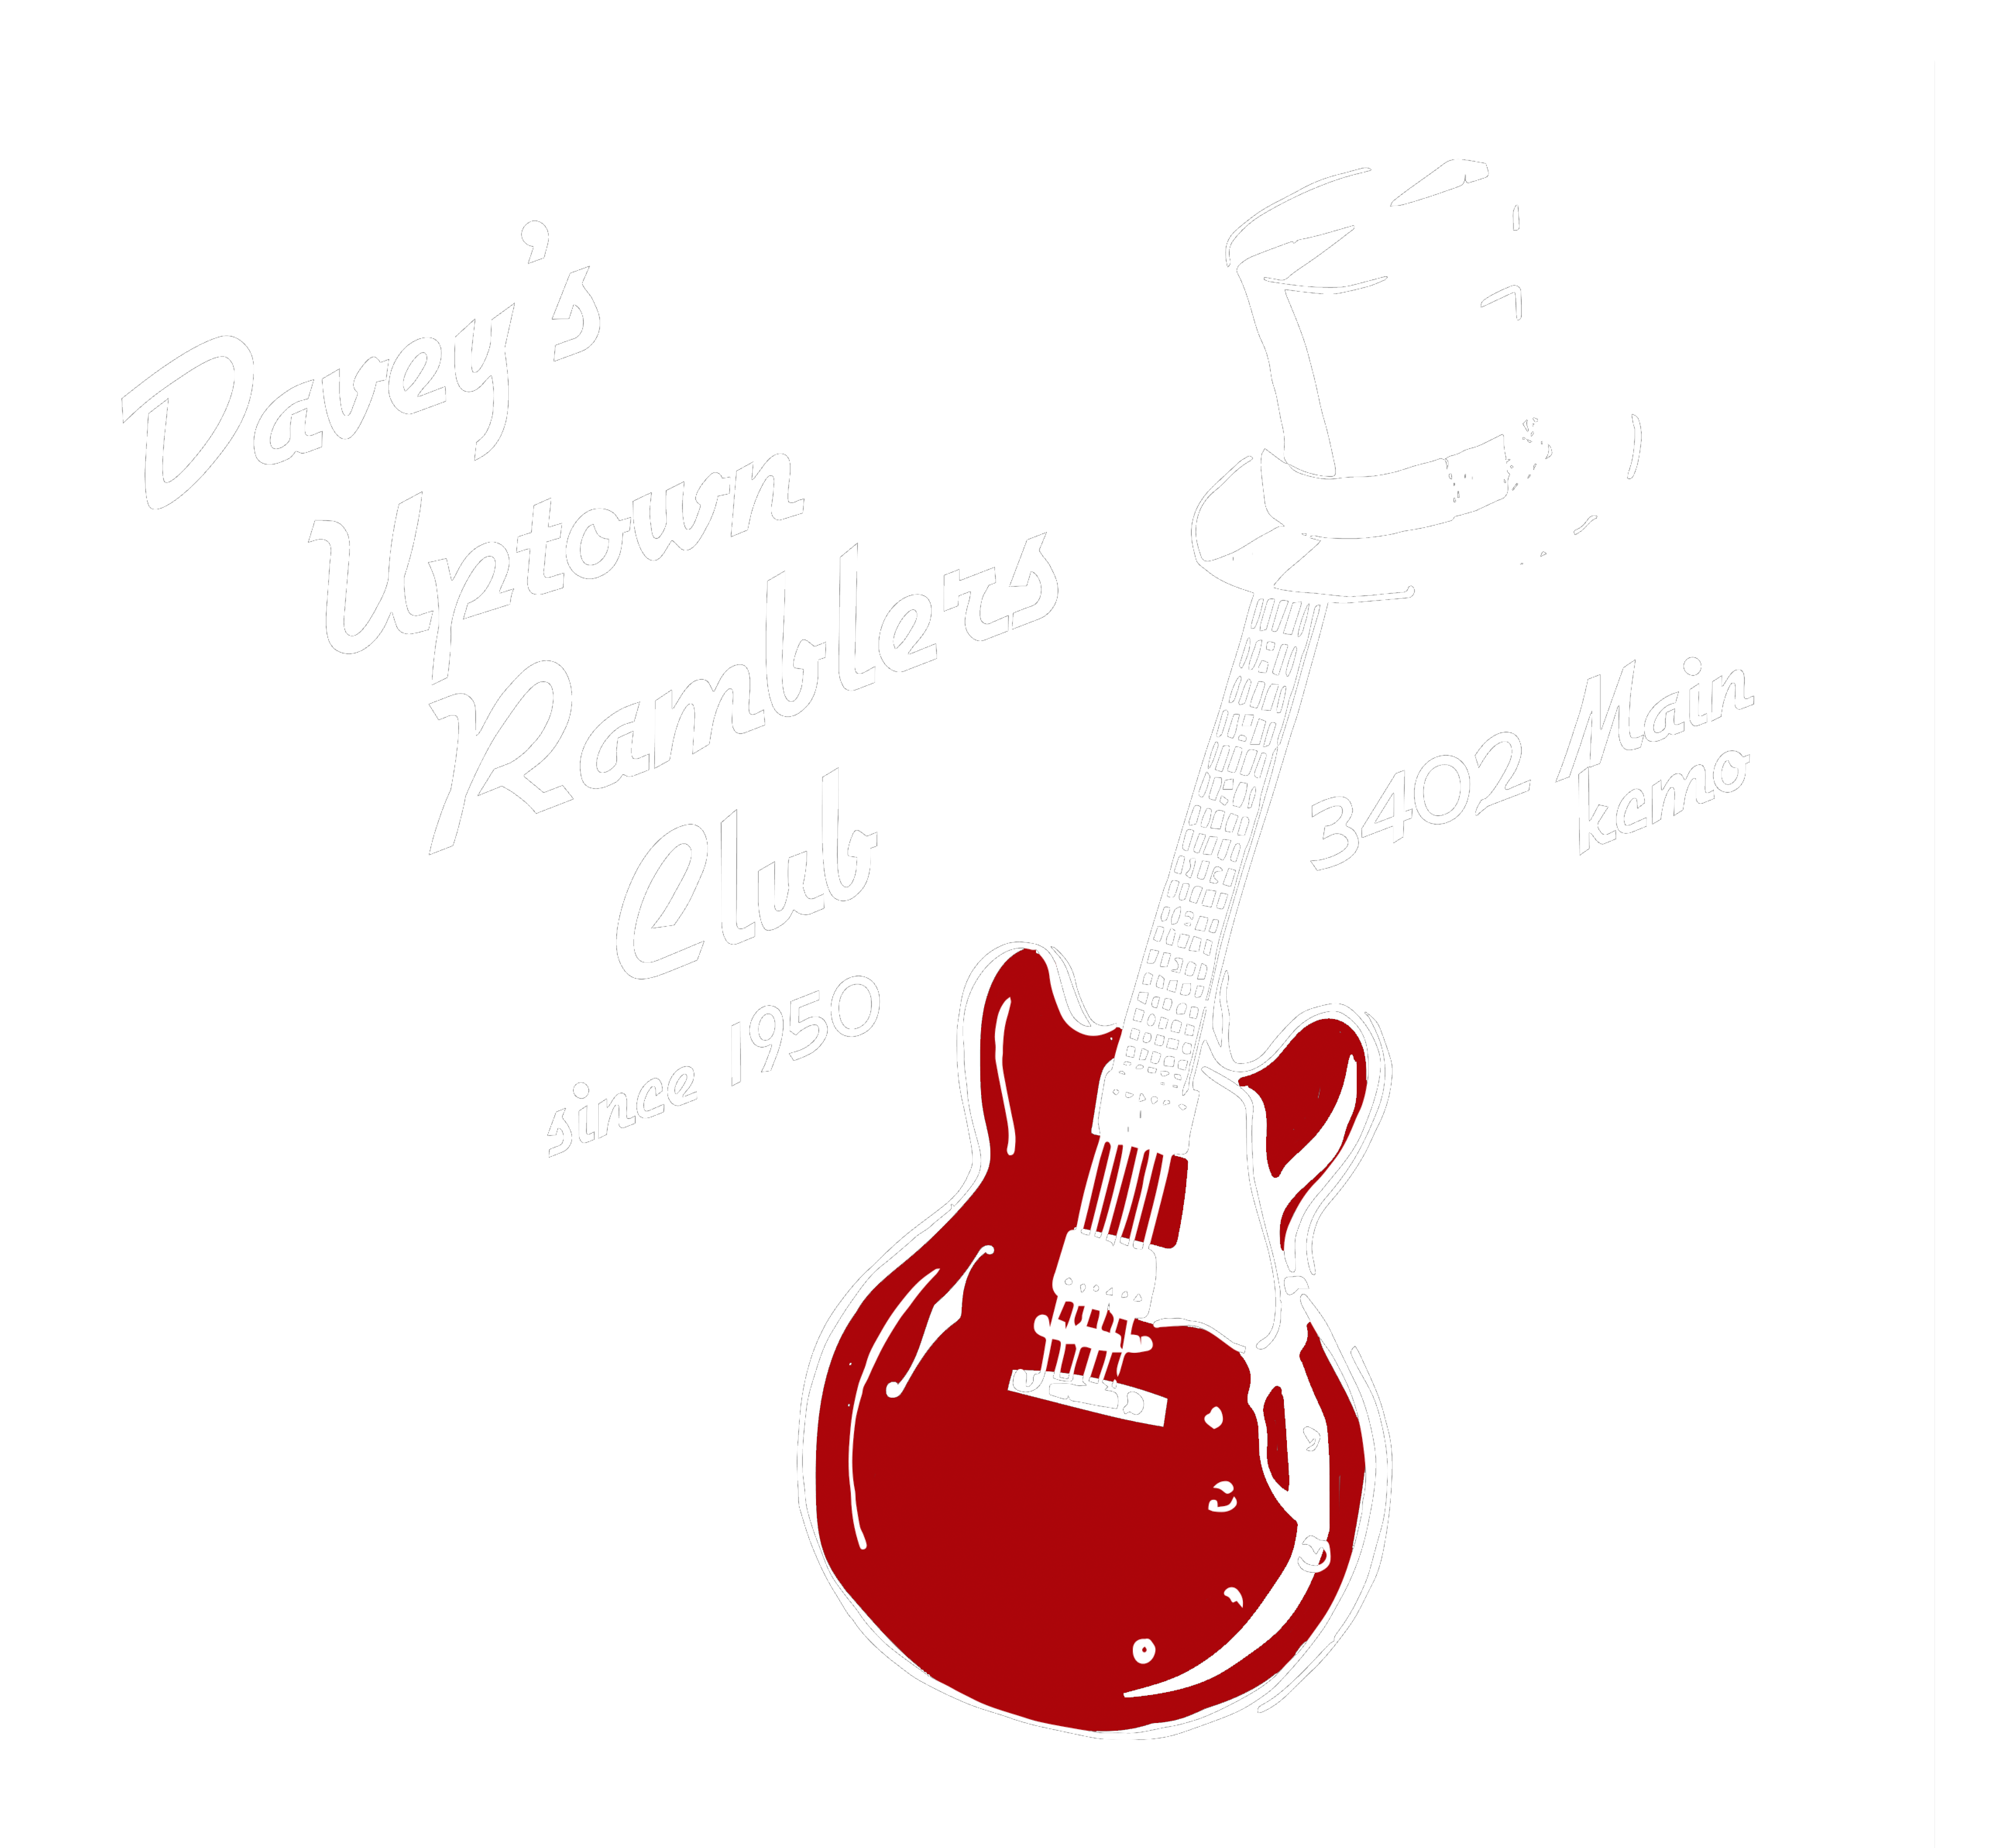 Davey's Uptown Ramblers Club